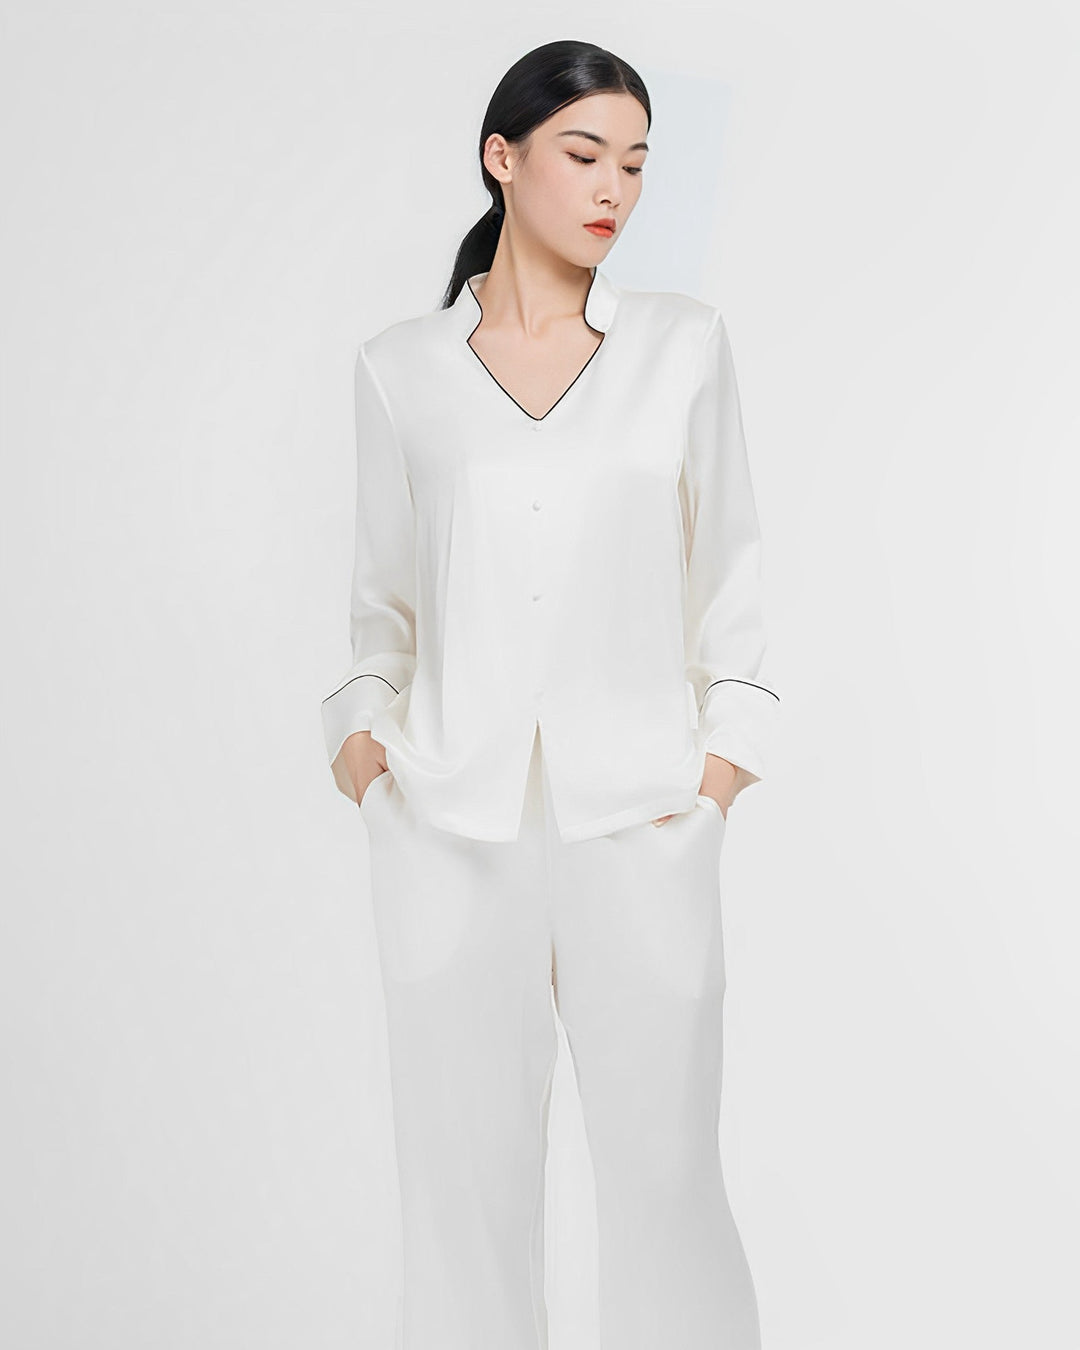 100% Silk Sleepwear for Women – Pajamas & Dresses – SusanSilk